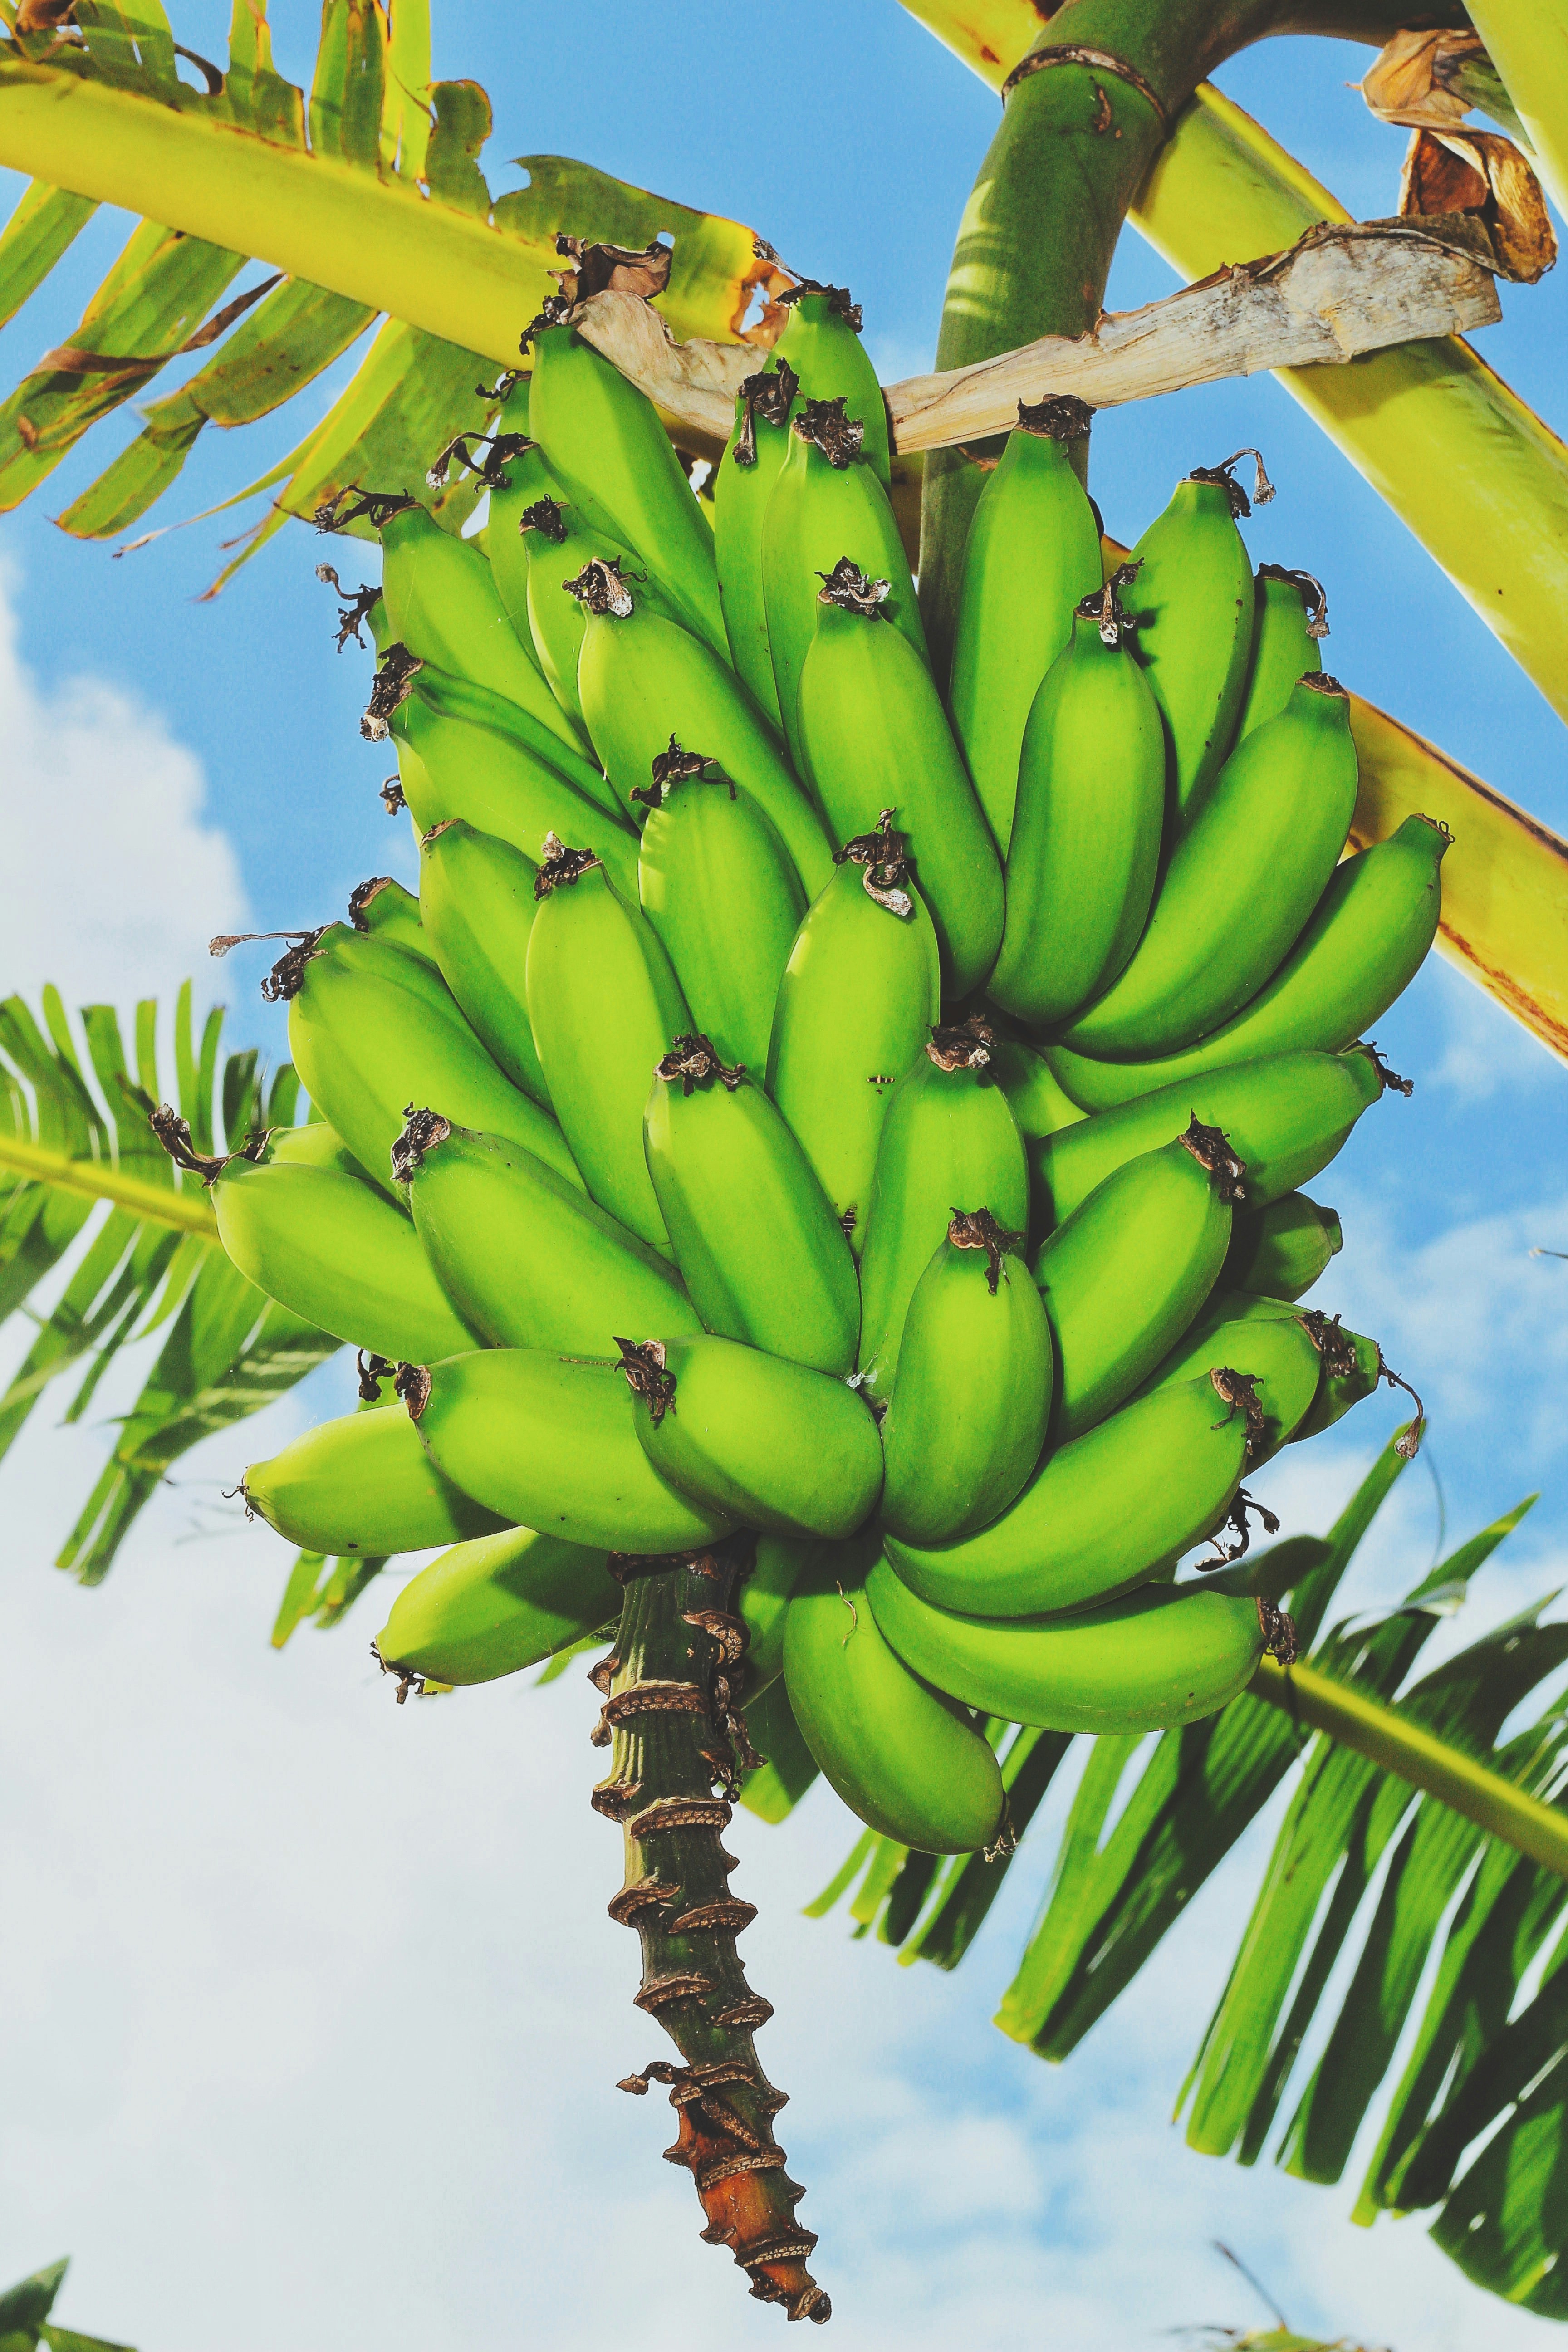 Tropical bananas